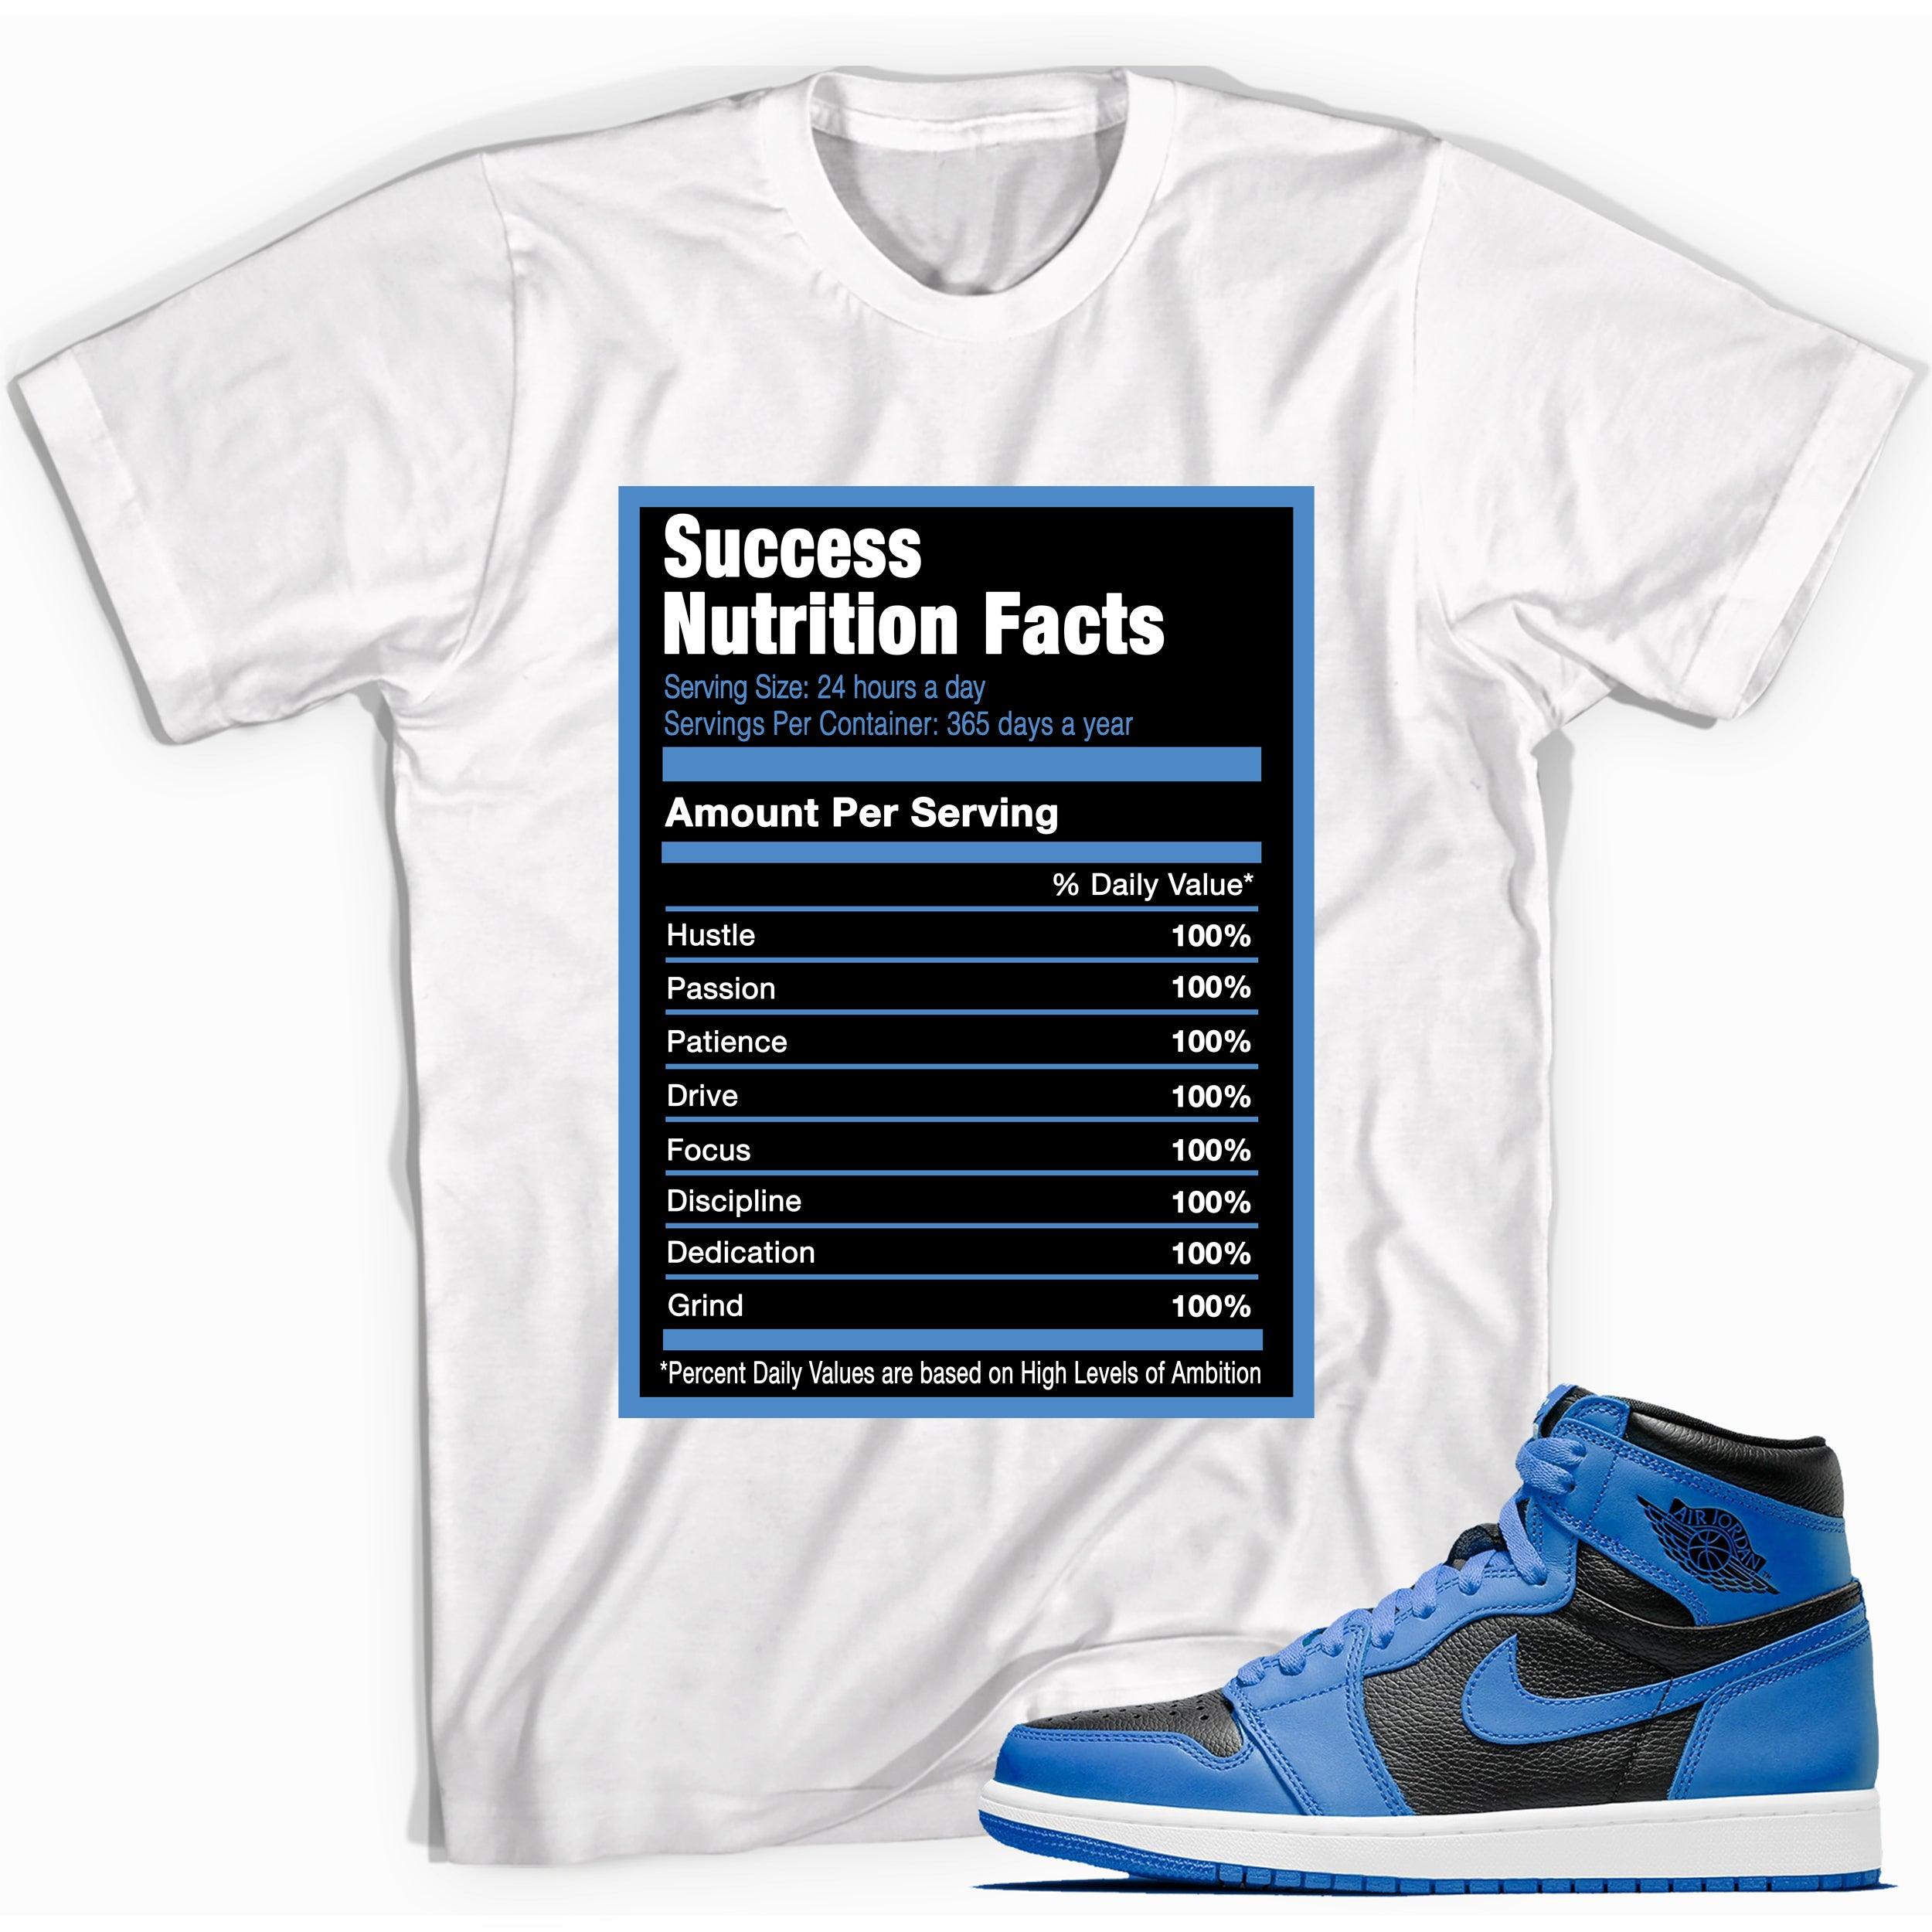 Success Nutrition Facts Shirt AJ 1 Dark Marina Blue photo